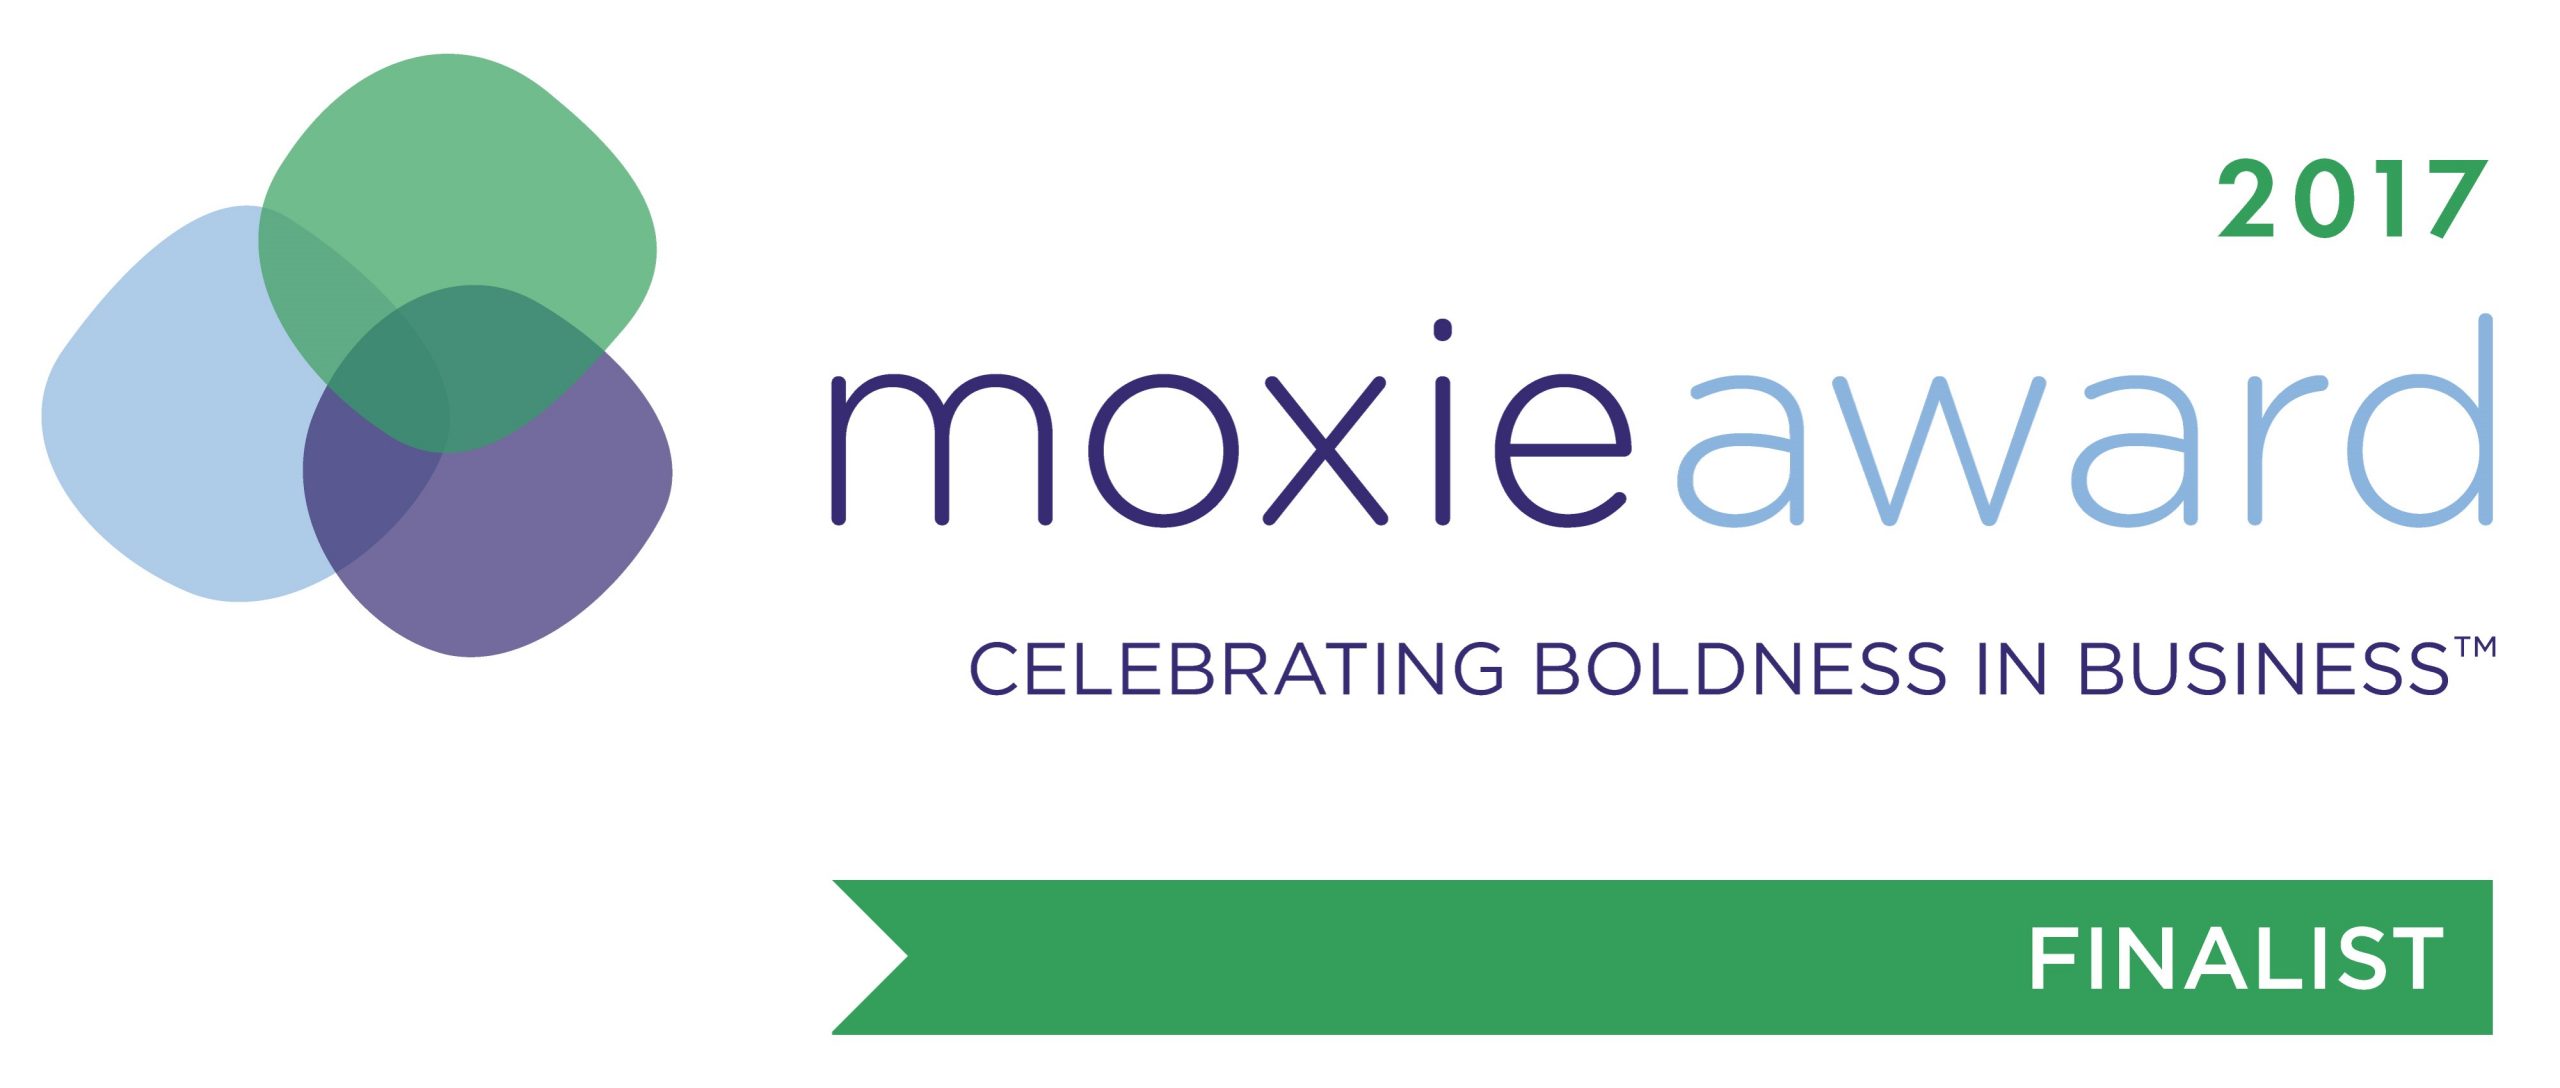 2017 Moxie Award Finalists Announced